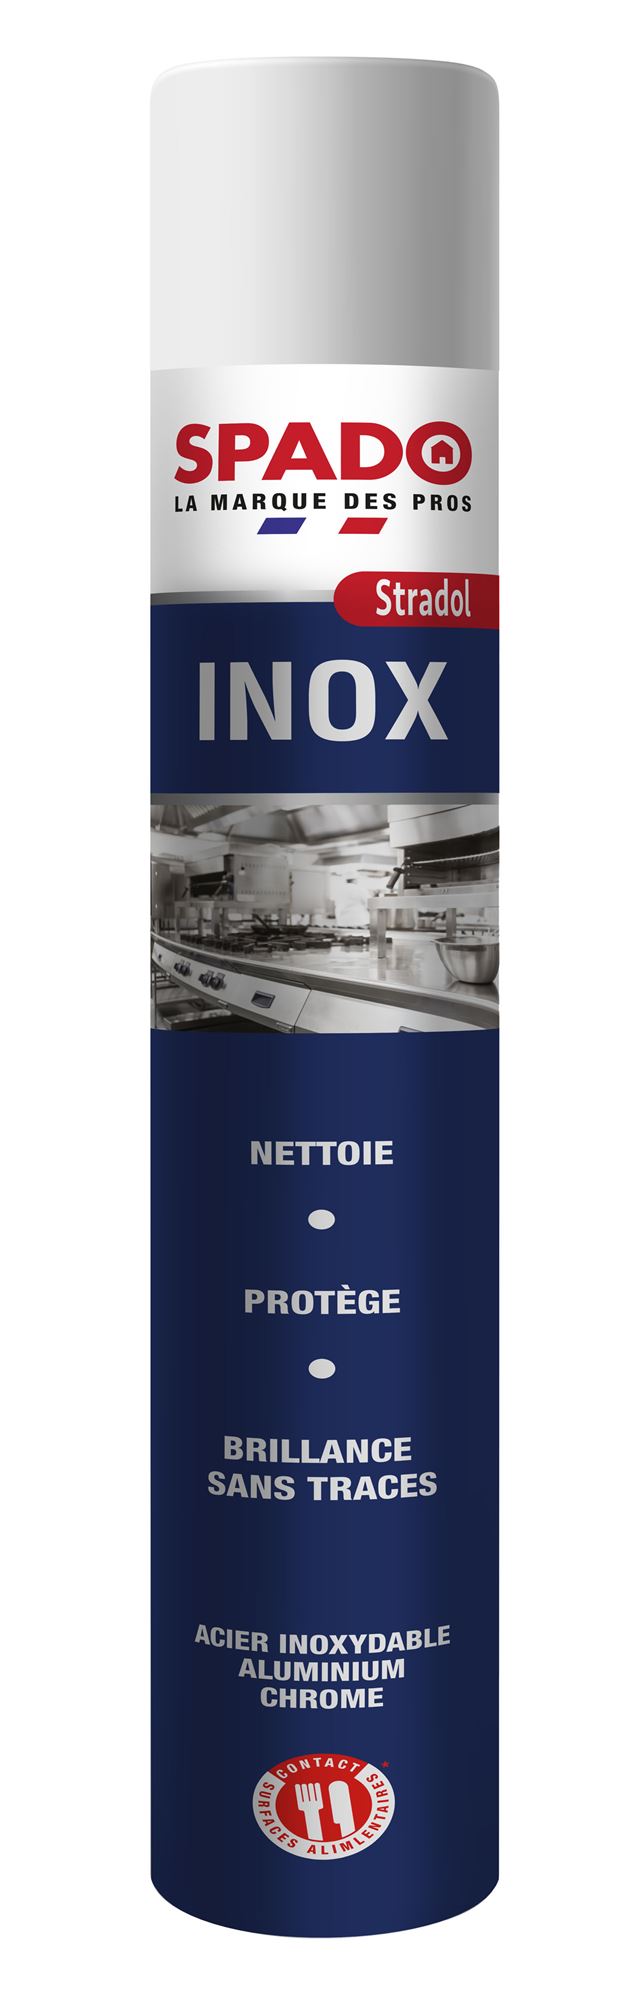 Best Hygiène n°1 Produit Nettoyant Inox